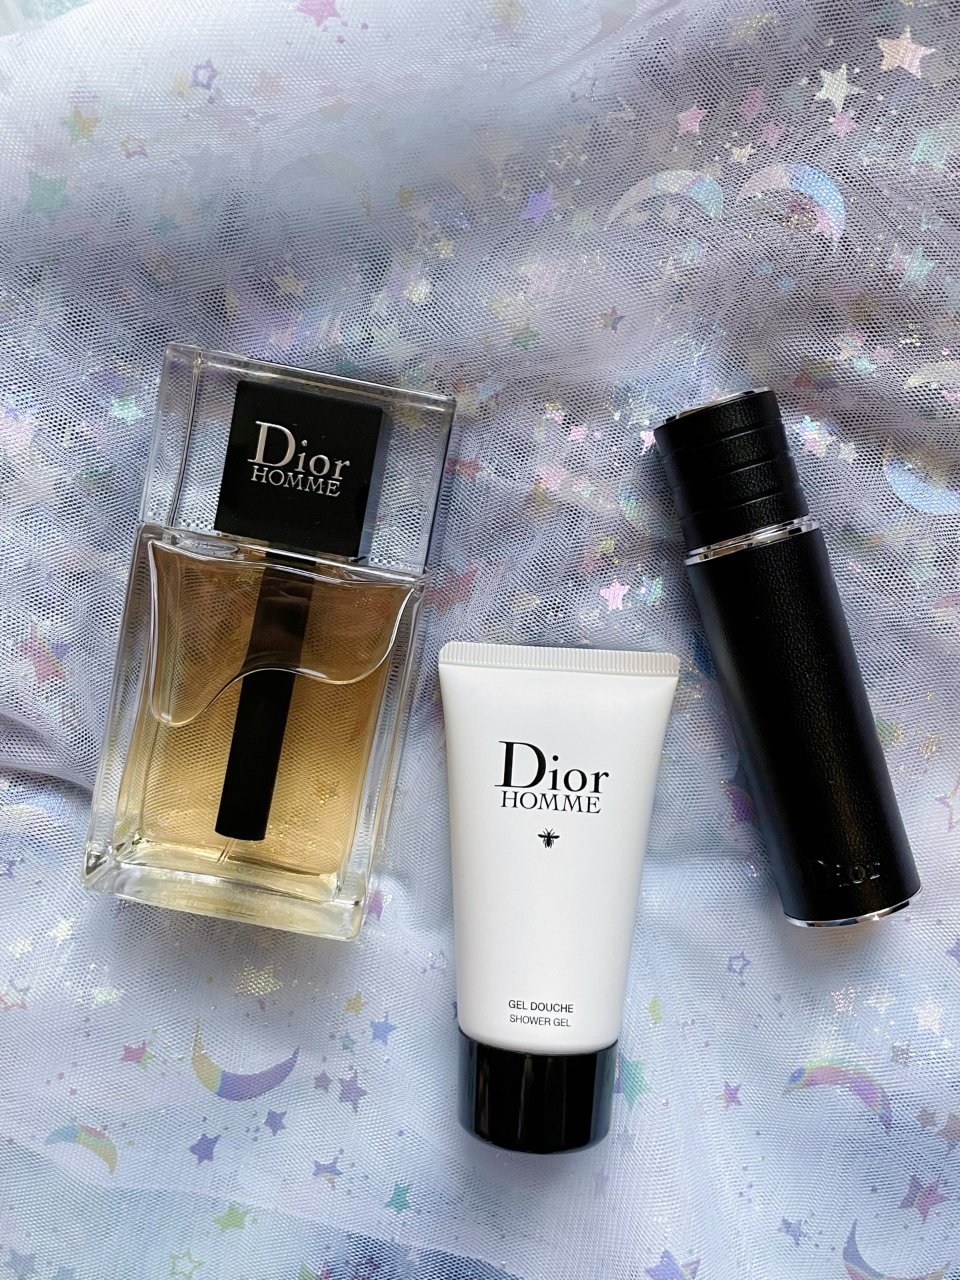 Dior Homme 3 pc Gift - Eau de Toilette, Shower Gel, Travel Spray | DIOR